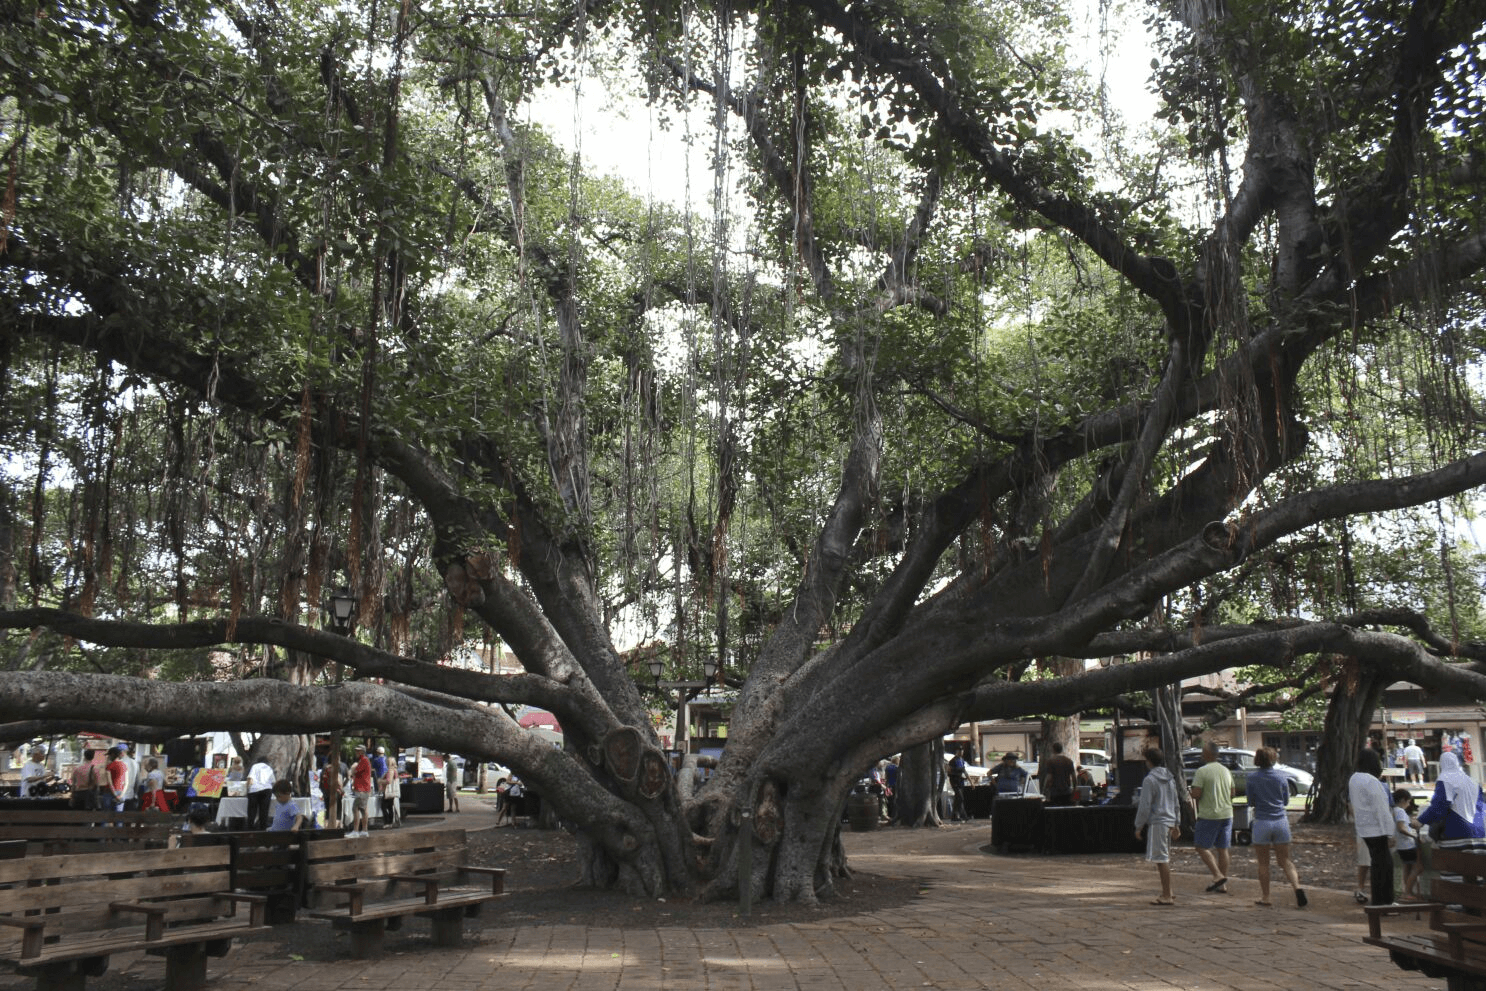 Largest banyan tree in Hawaii